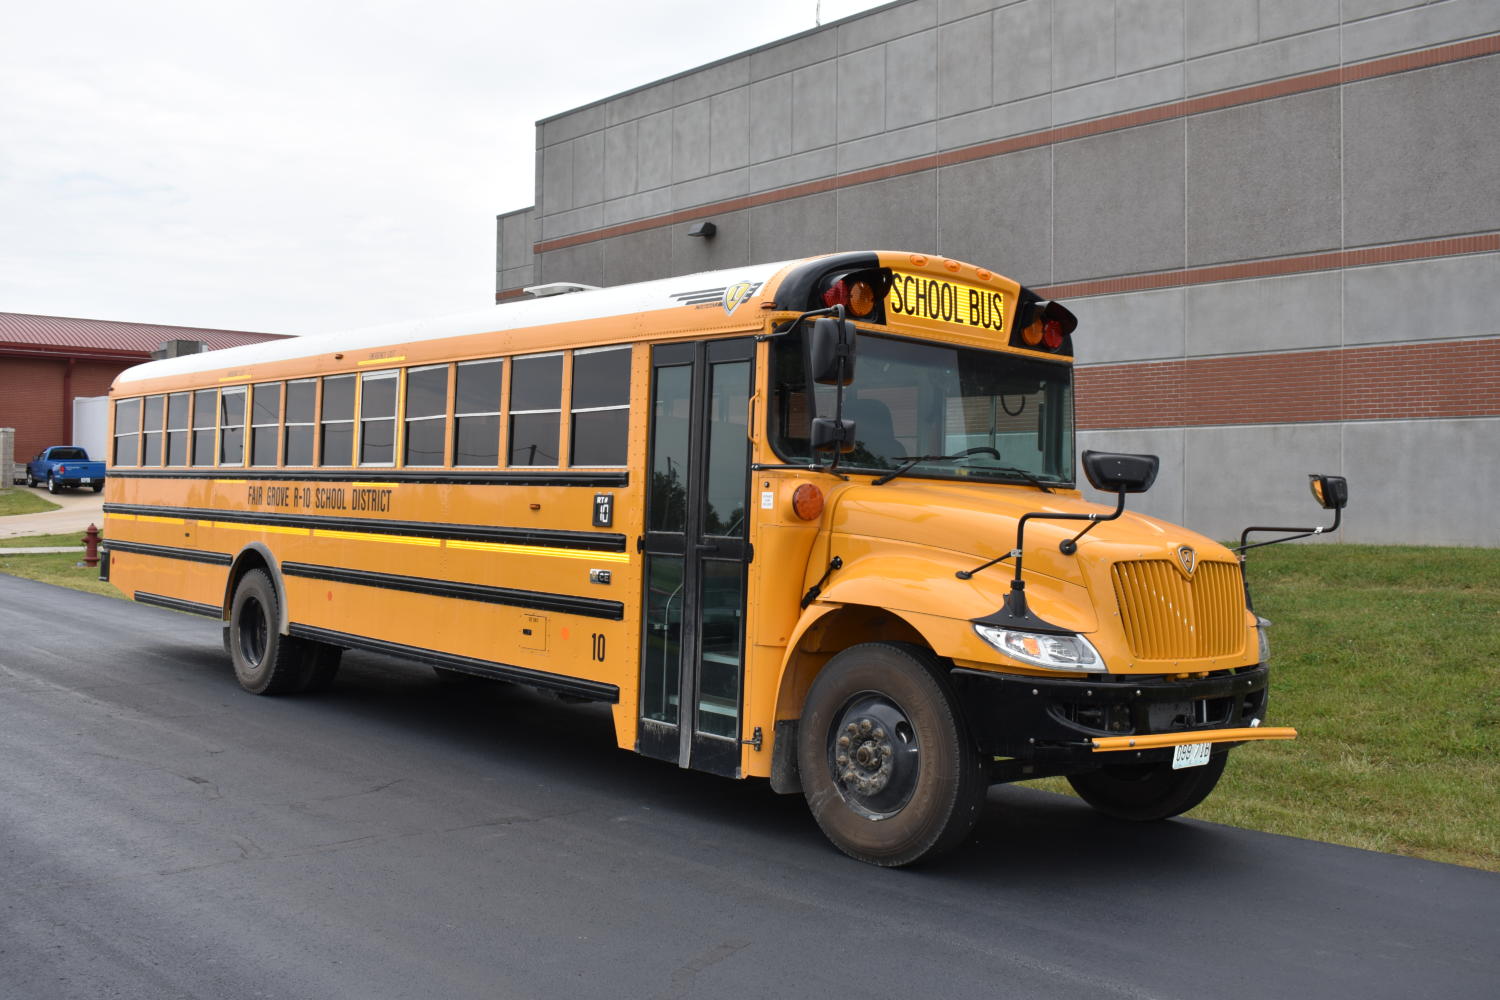 A Fair Grove School Bus